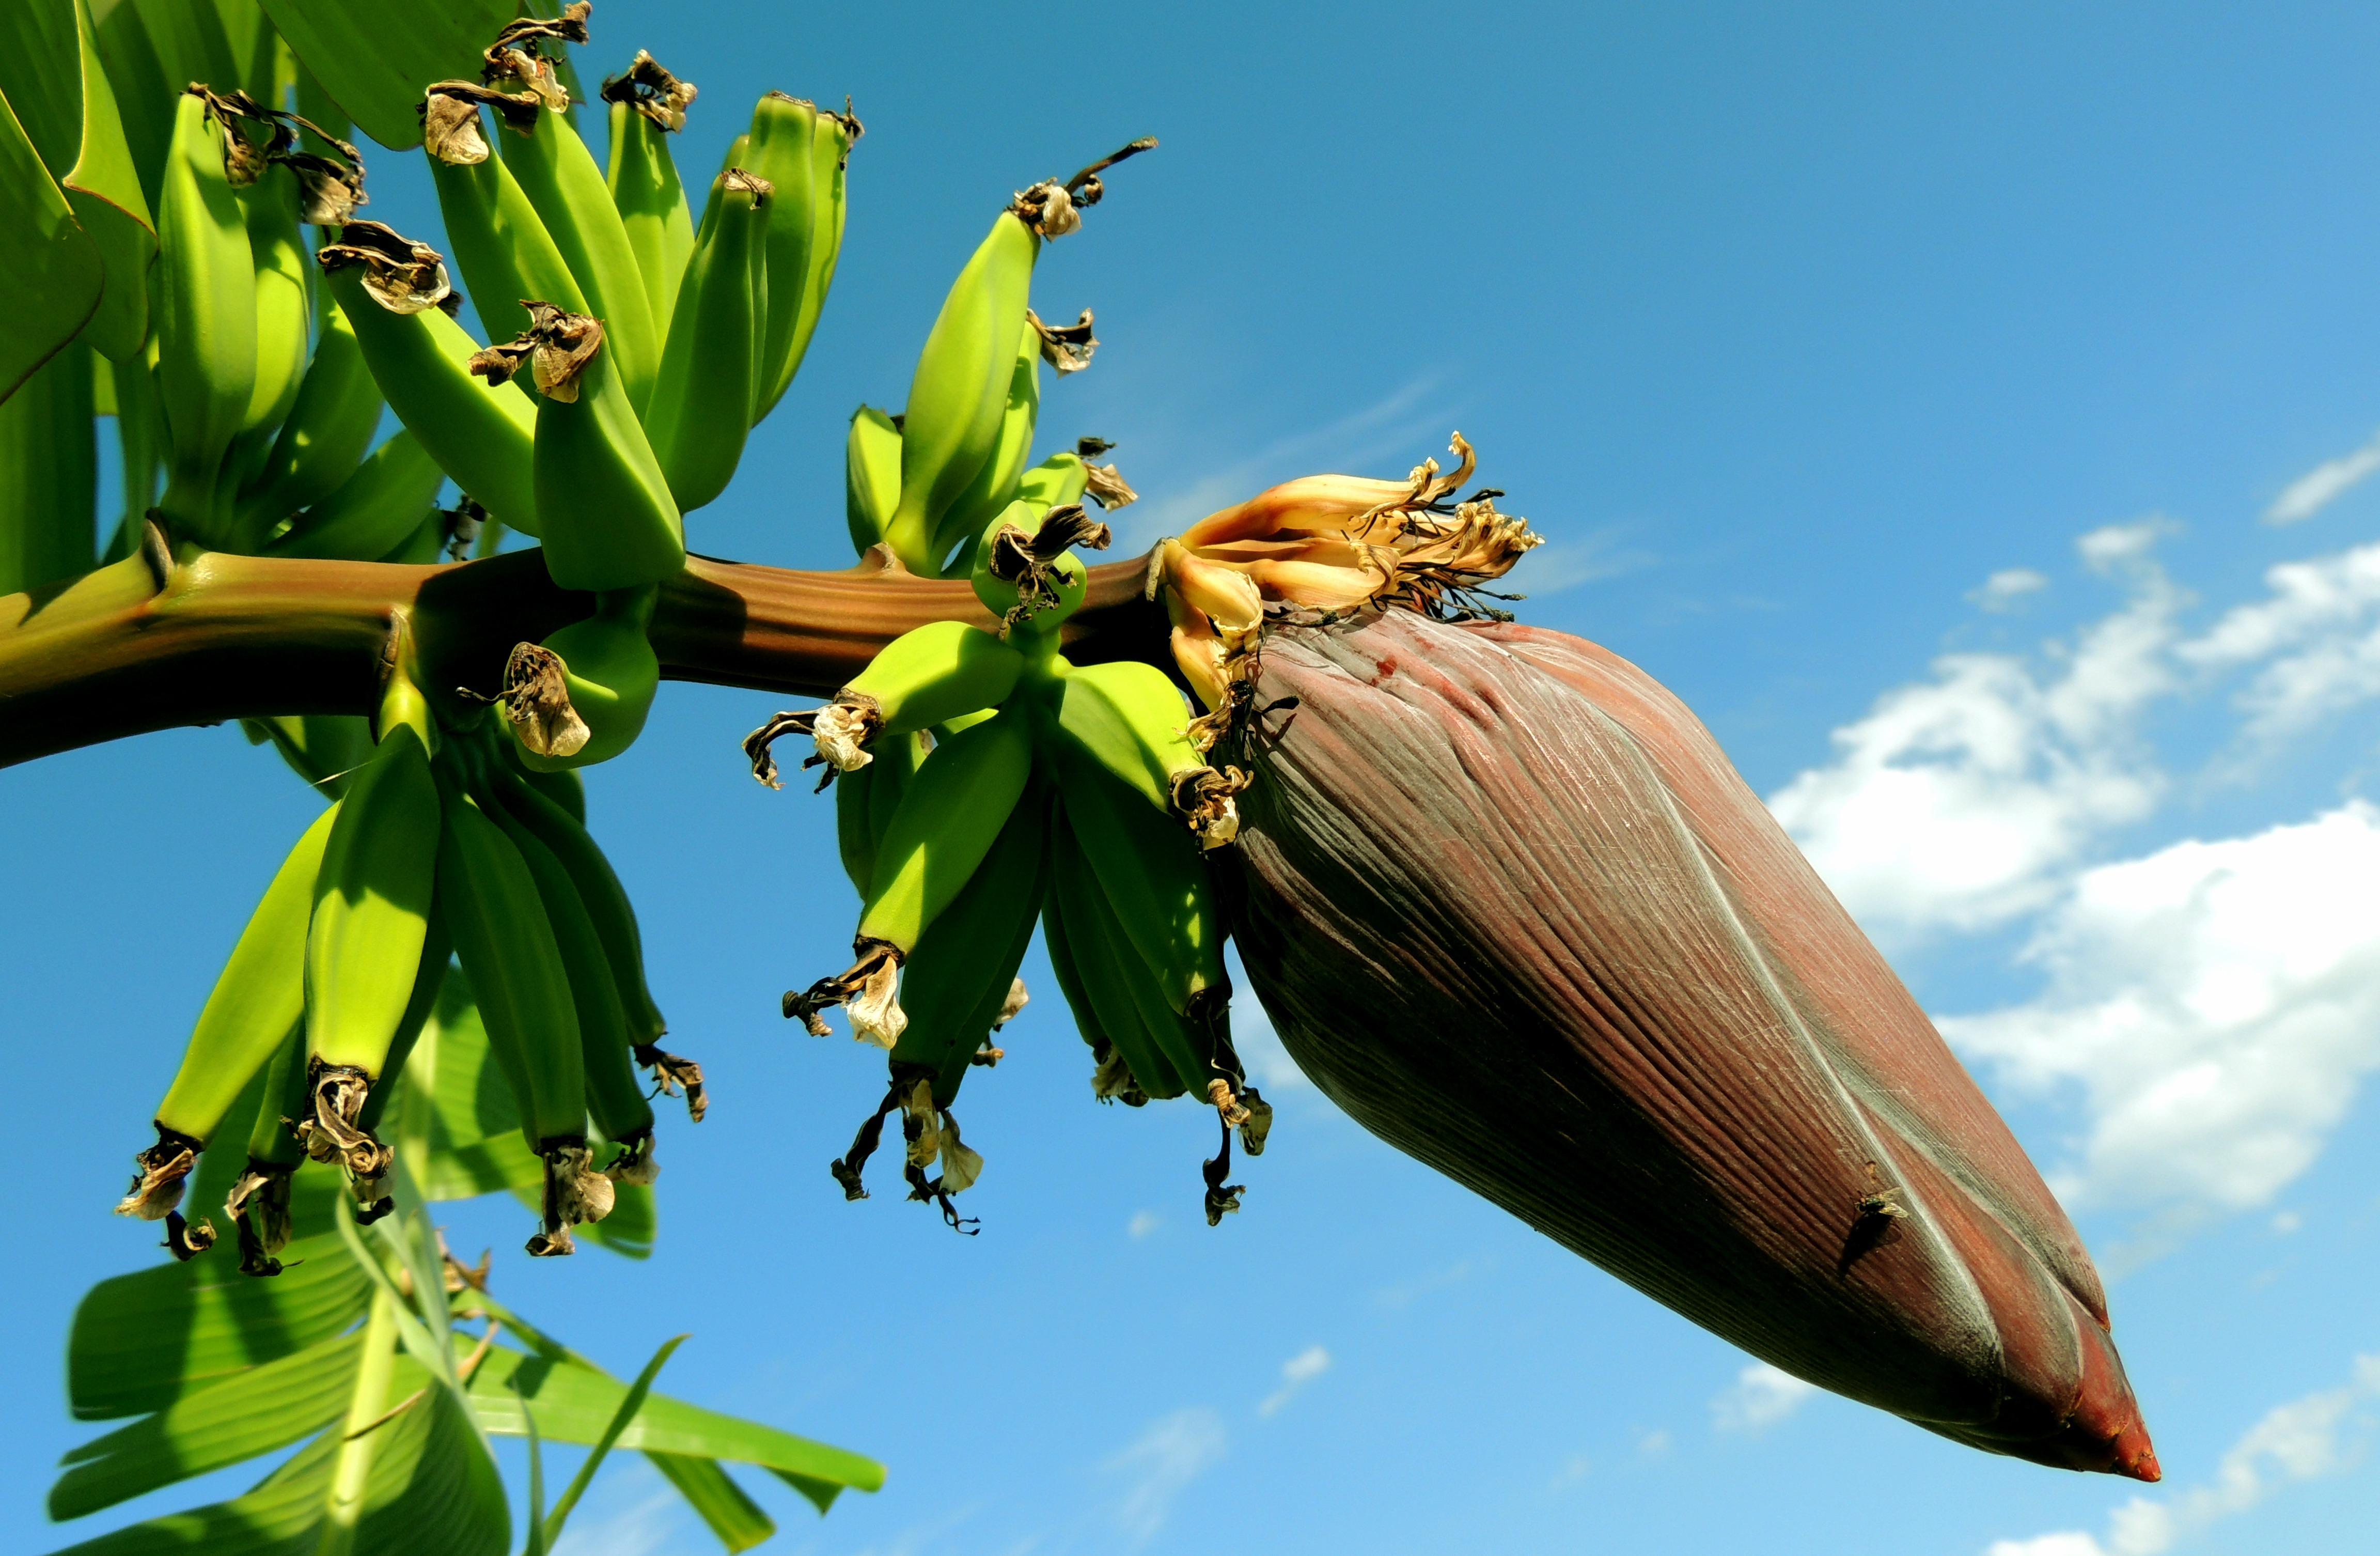 A branch of the banana tree